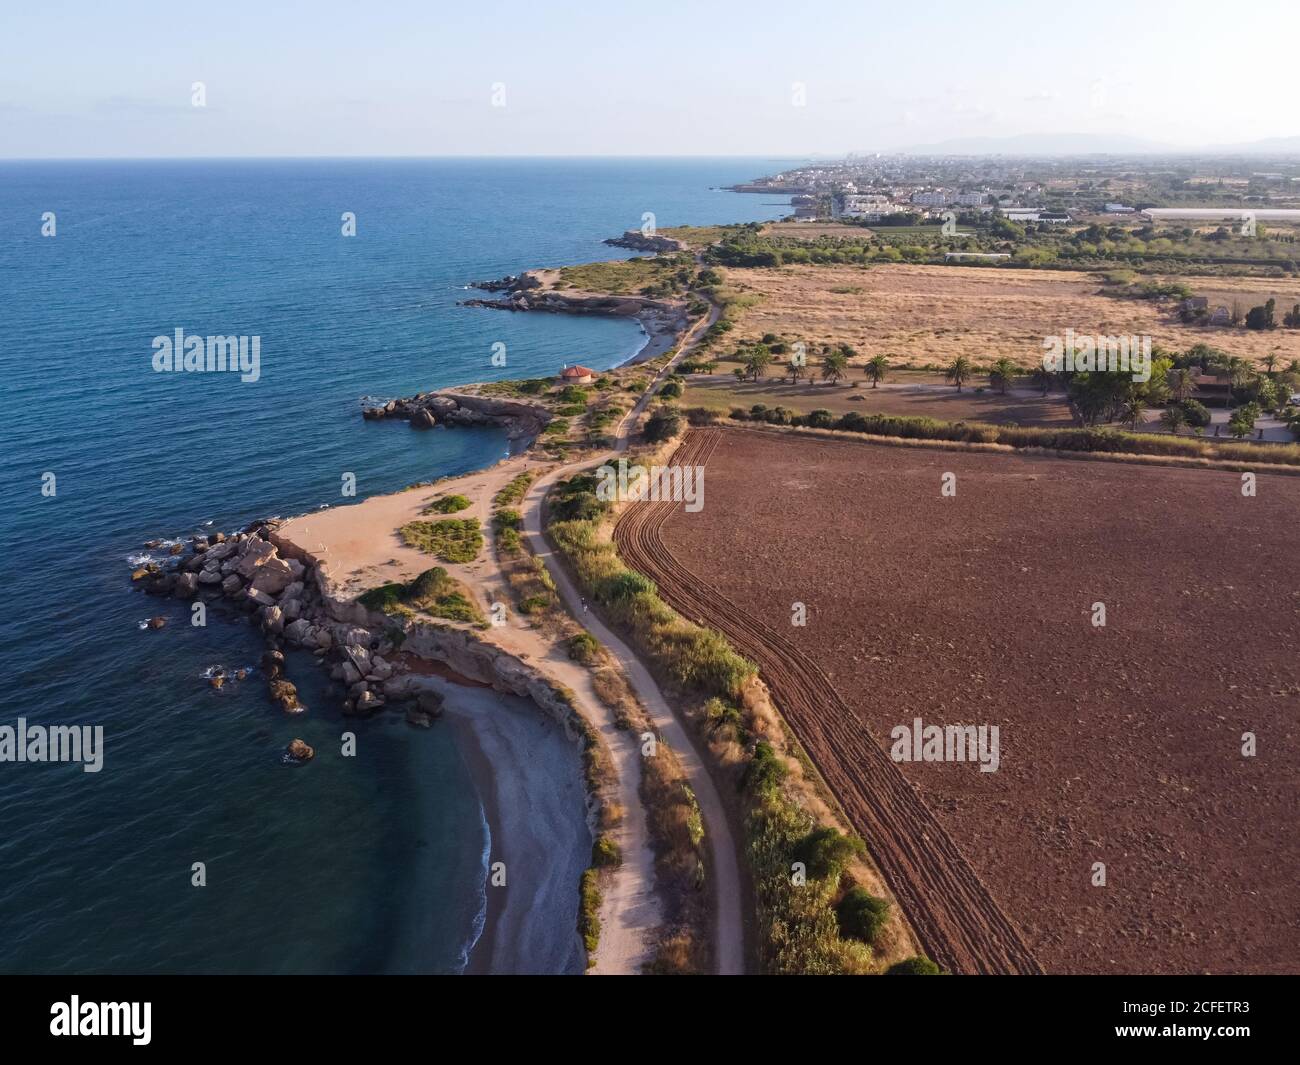 Vista aerea di una costa rocciosa vicino a un terreno arato a Jardi de Sol de Riu, Vinaros, Spagna. Foto Stock